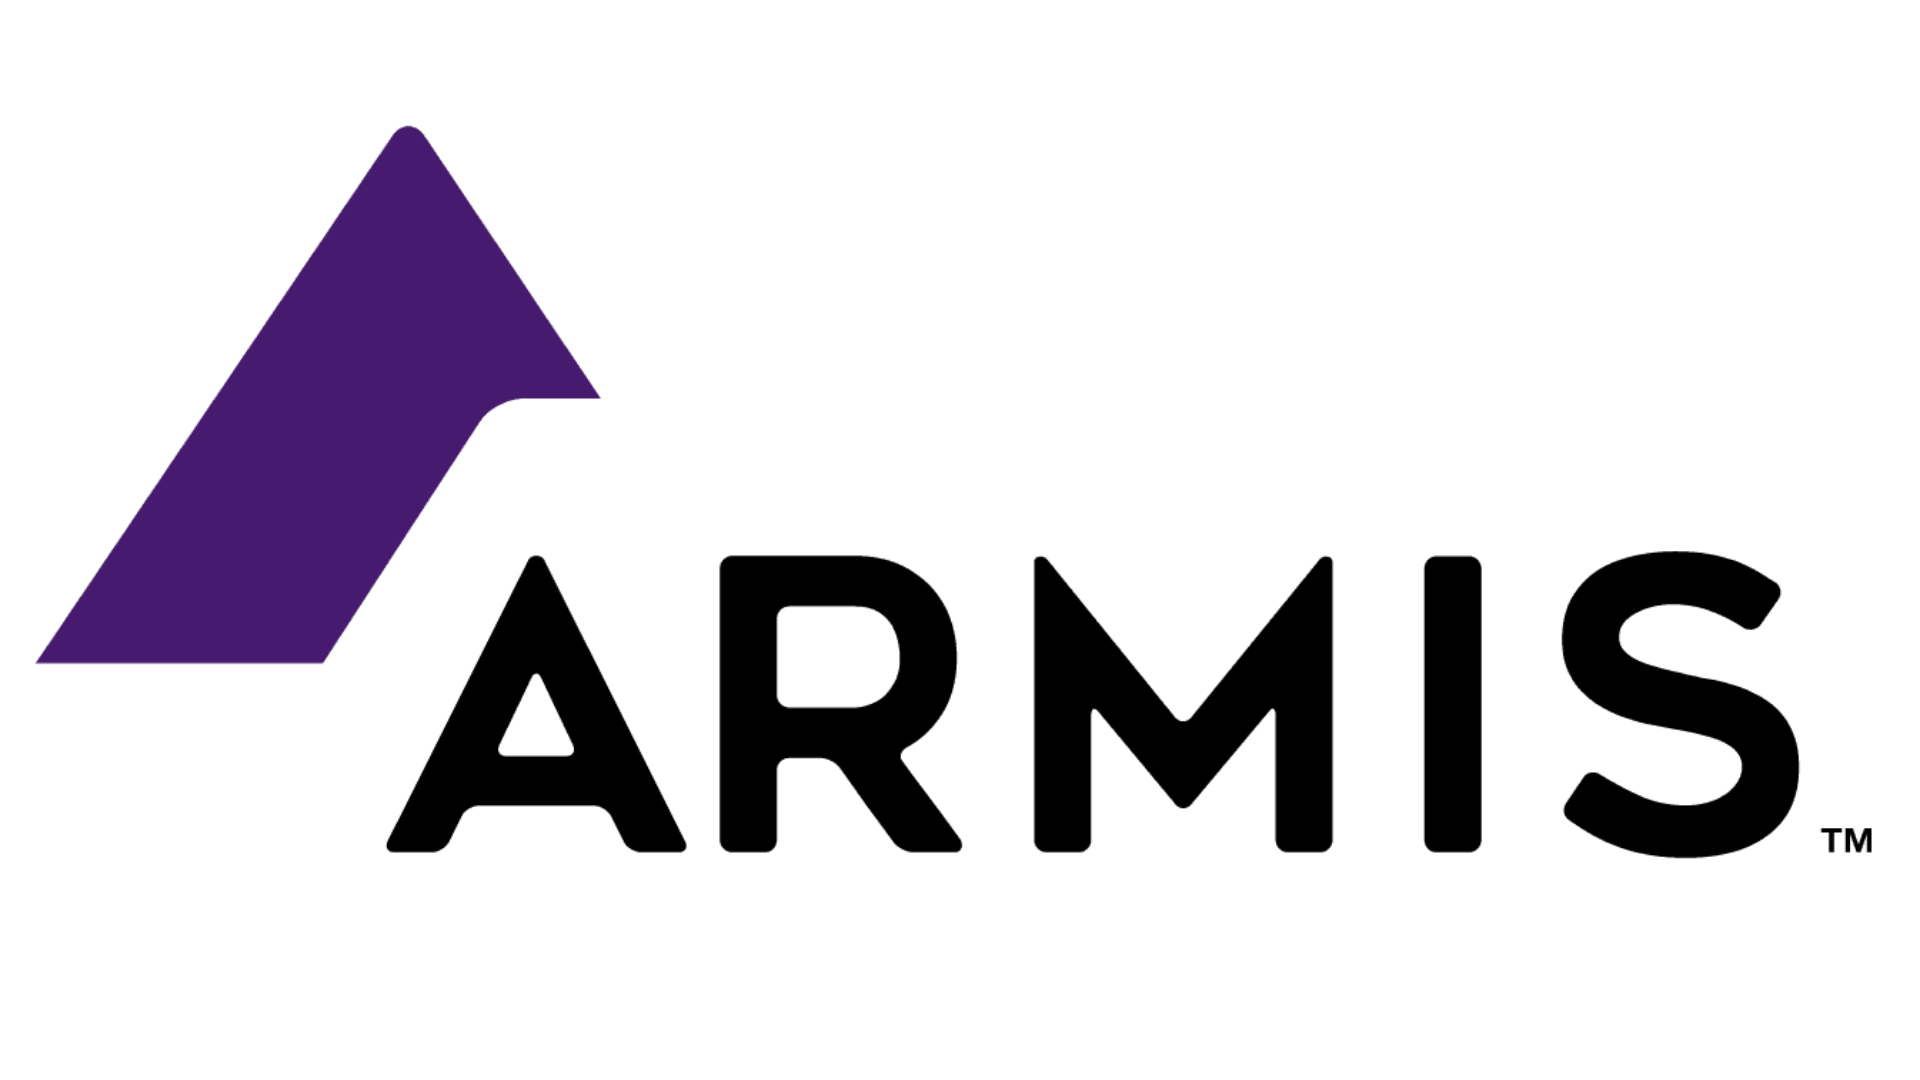 Armis Security logo